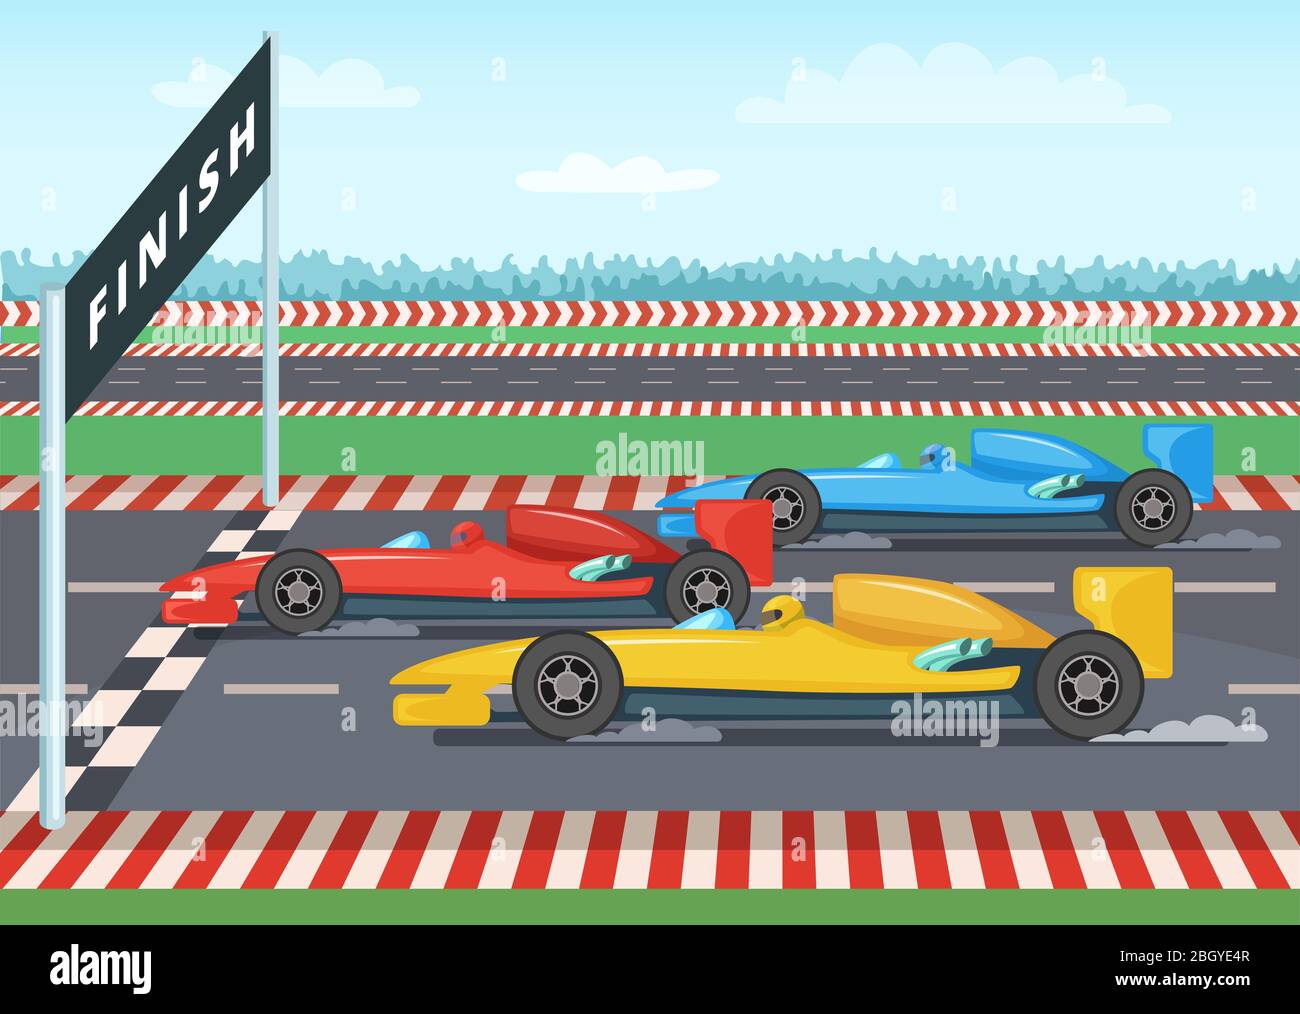 Race cars on finish line. Sport background illustration. Car speed winner, checkered finishing line vector Stock Vector